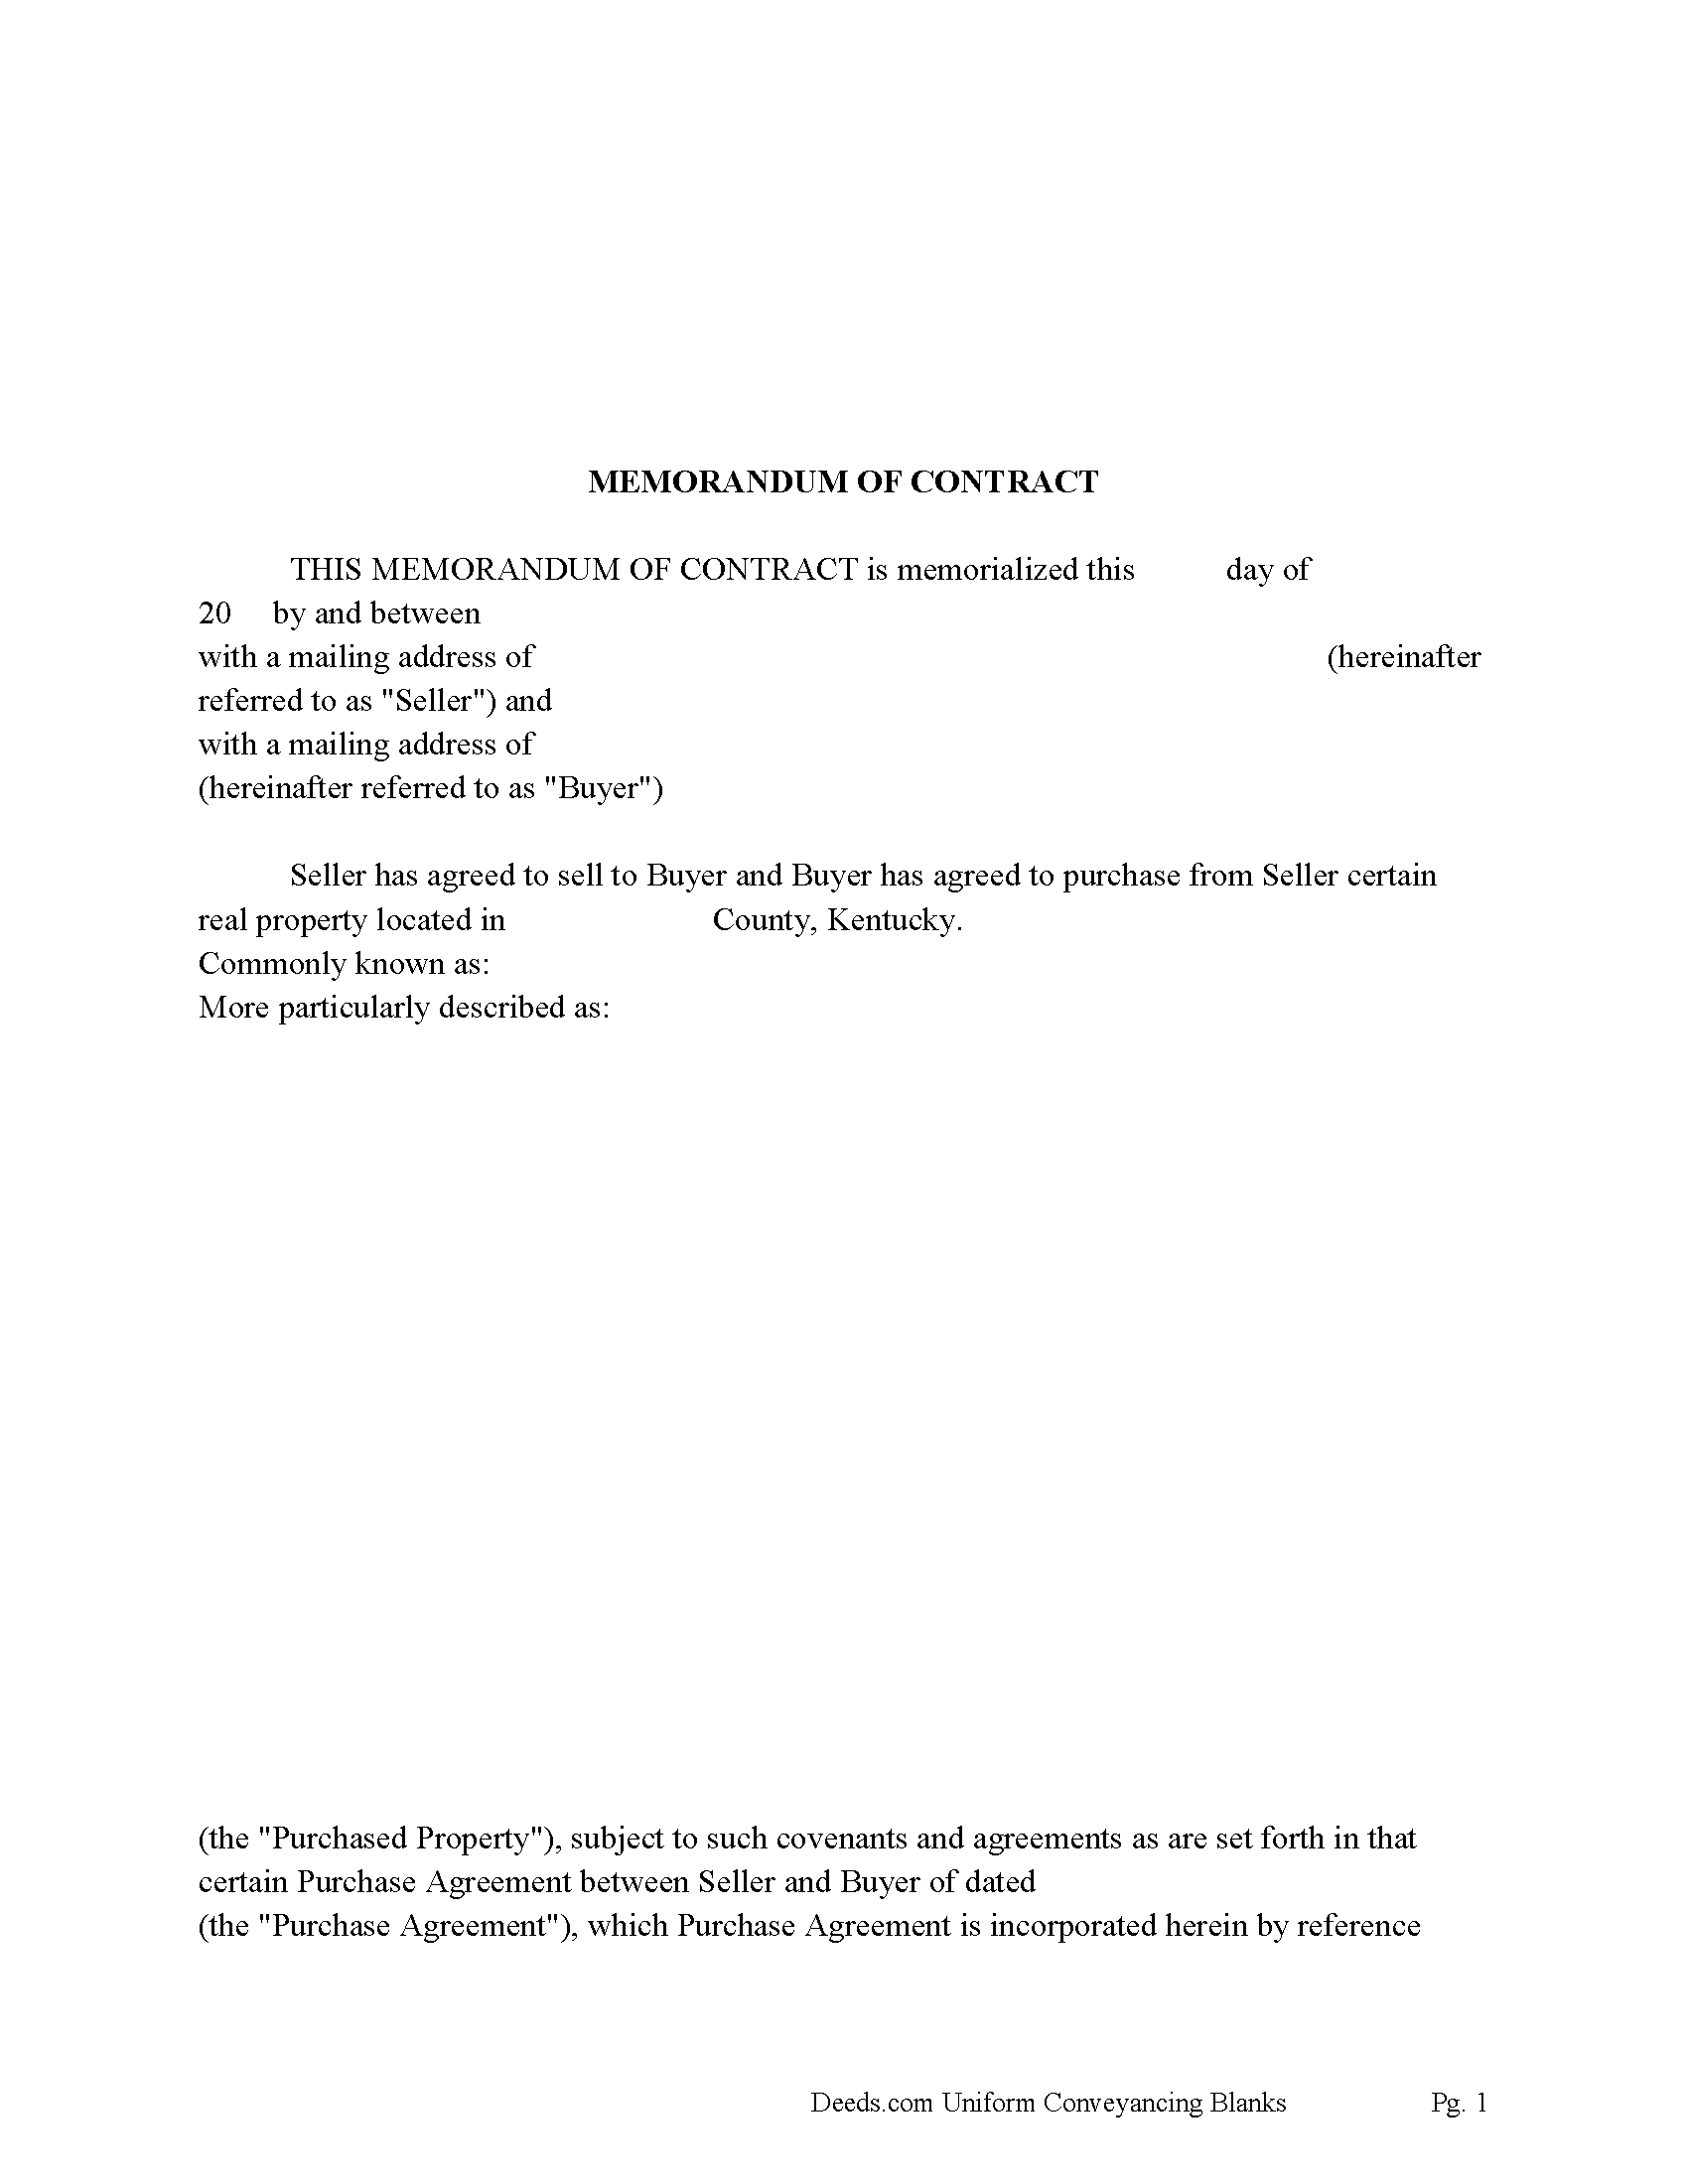 Memorandum of Contract Form